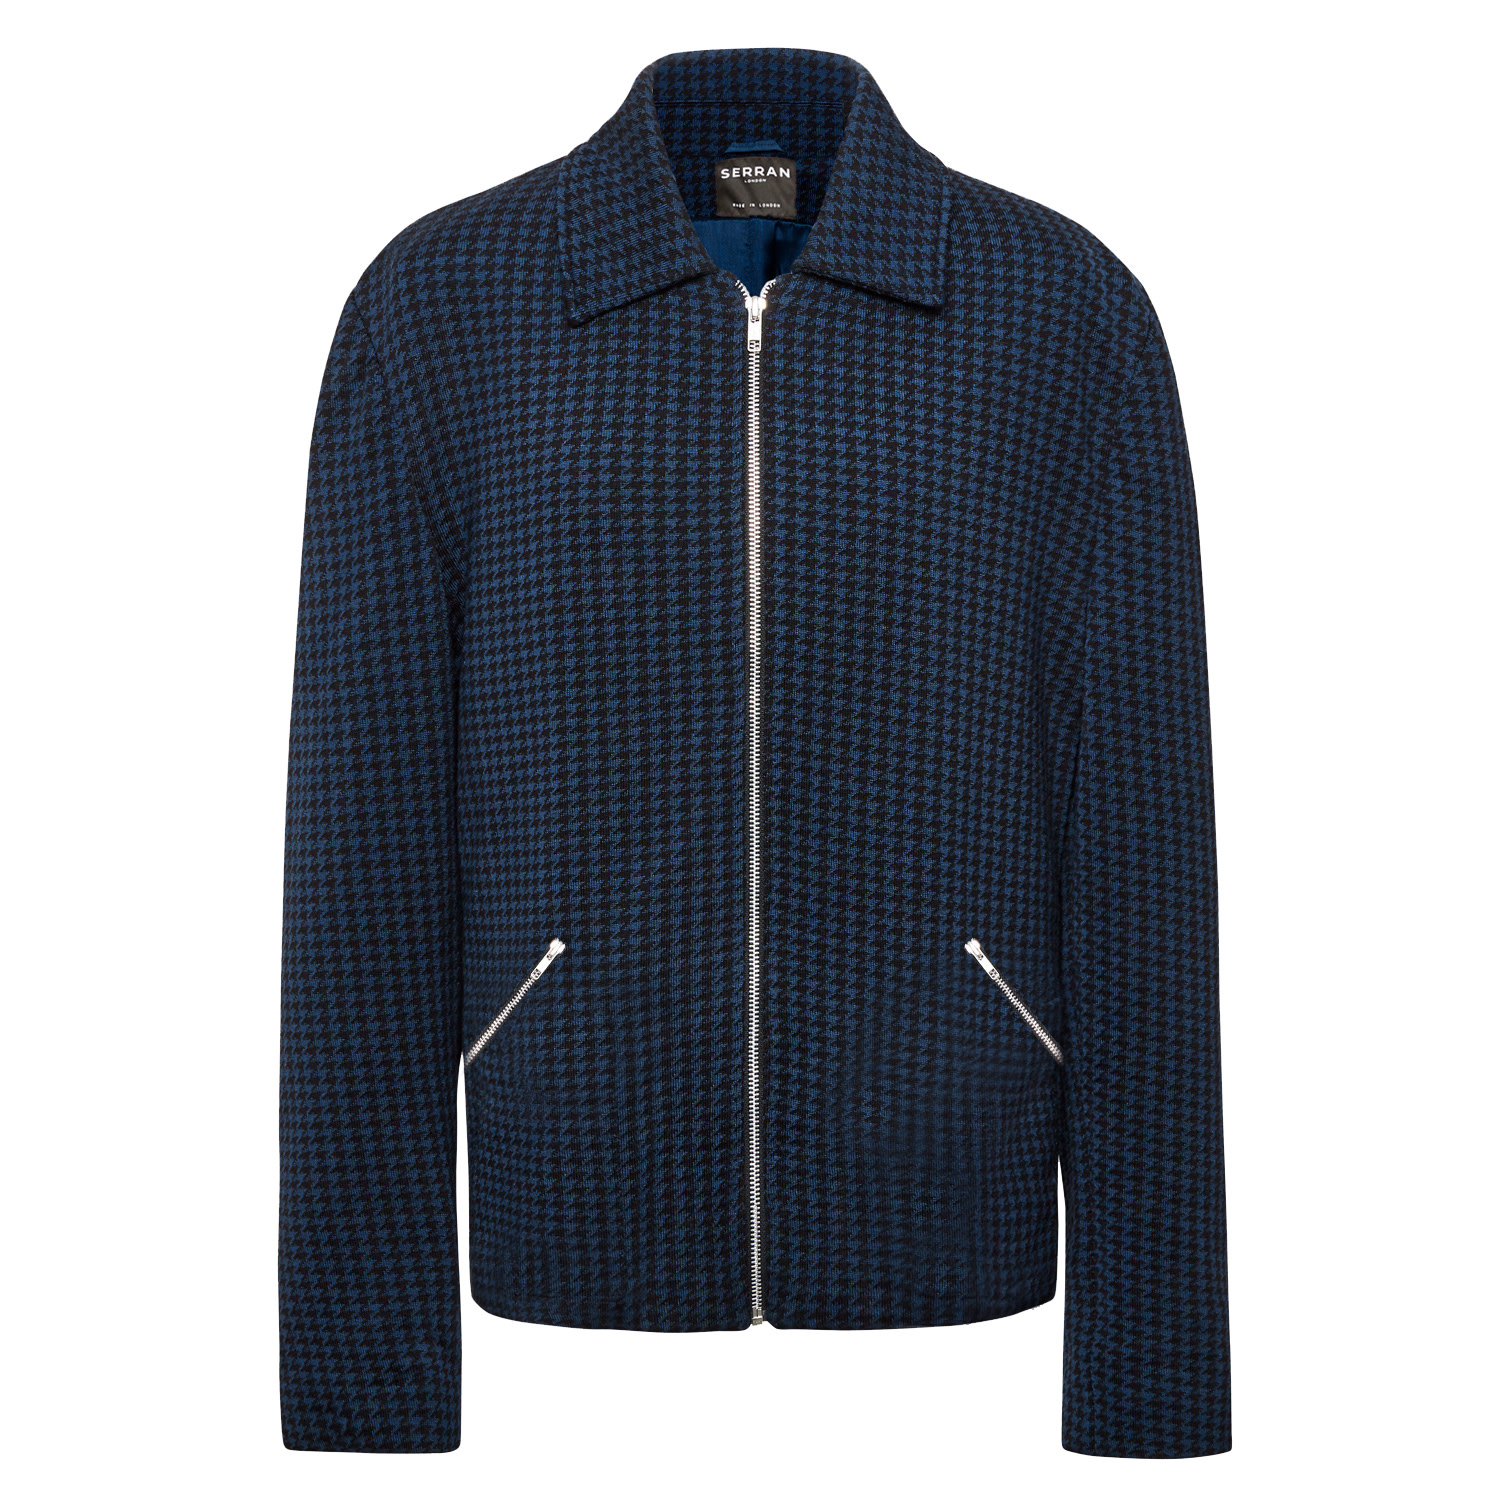 Men’s Blue / Black Houndstooth Knitted Jacket - Navy & Black Extra Small Serran London